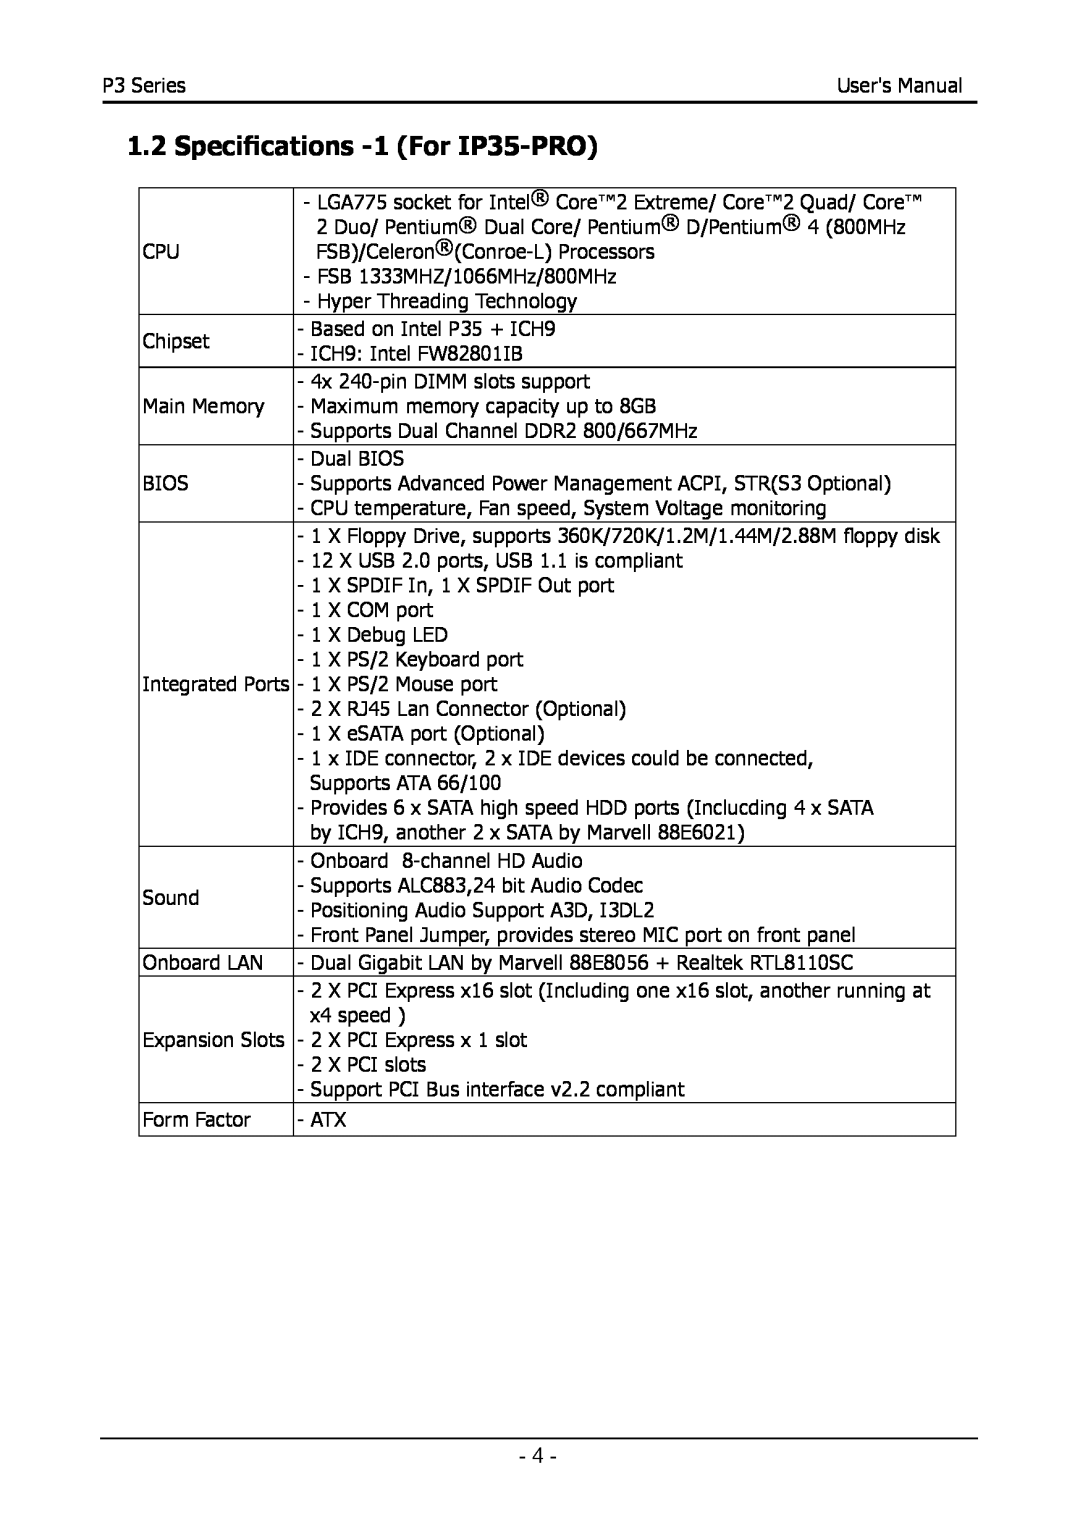 Intel Intel P35/P31 Socket LGA775 Processor Mainboard, 88ENEP3S00 user manual Specifications -1 For IP35-PRO 